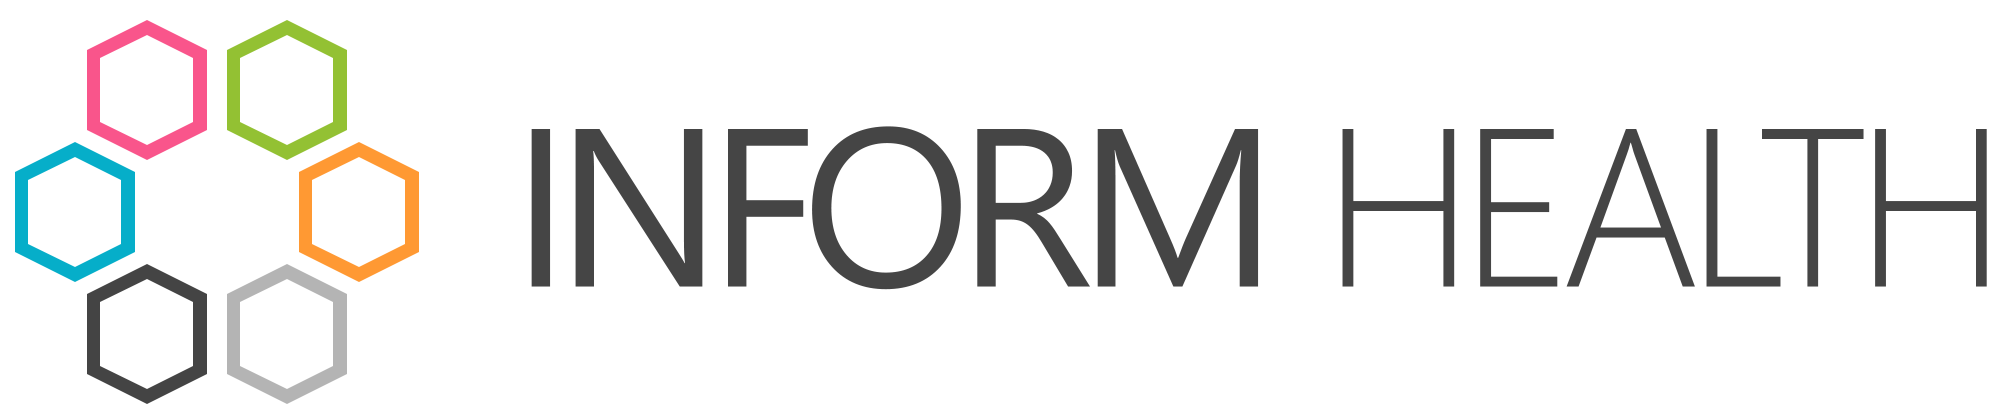 Inform health logo